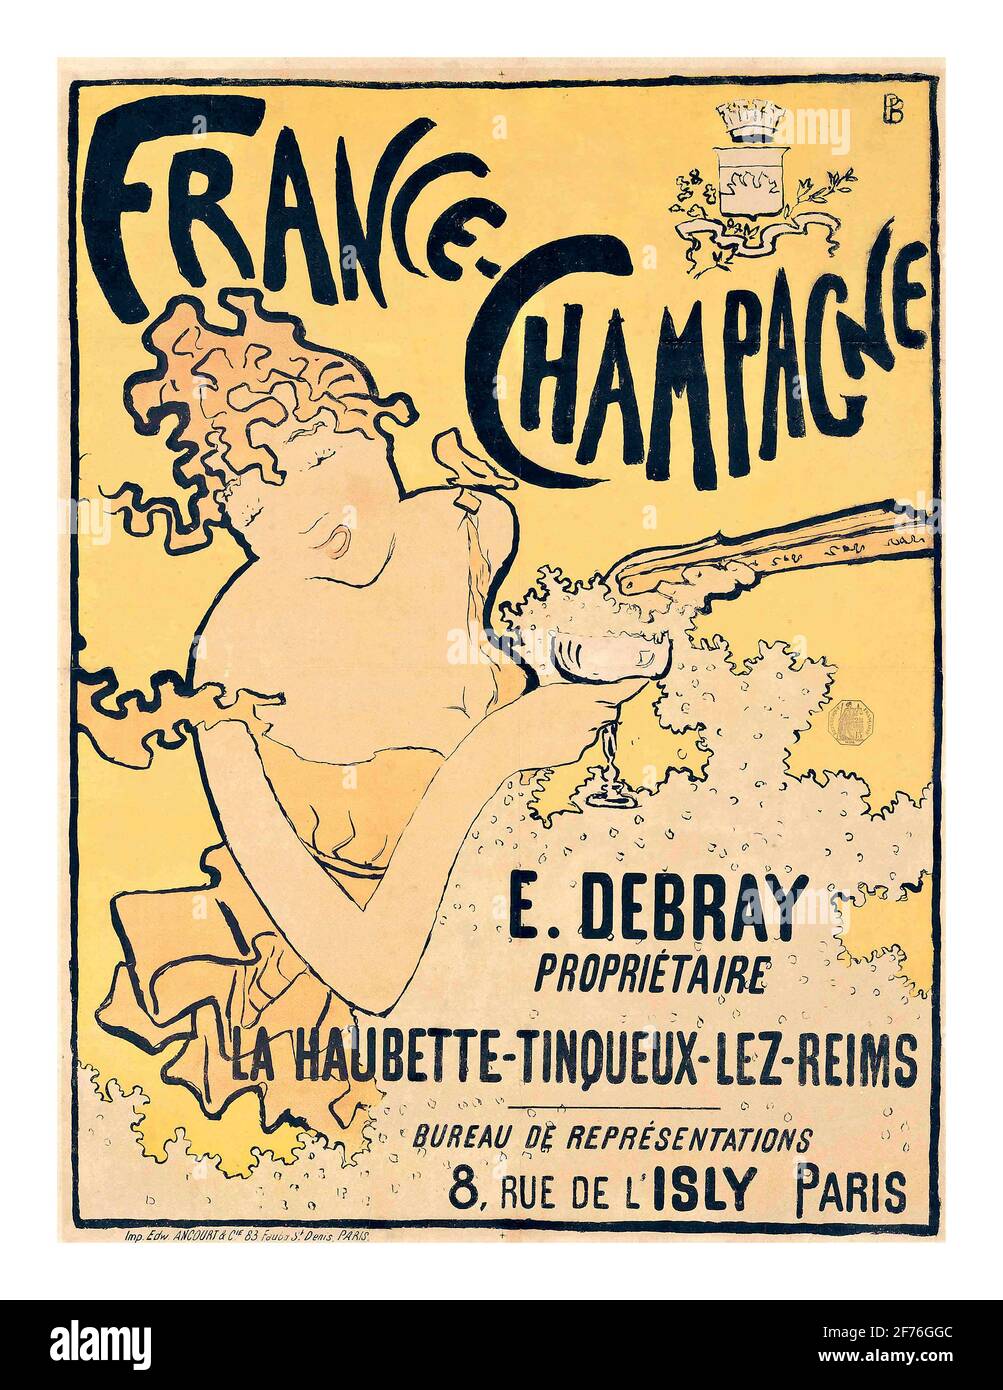 Vintage ‘France Champagne’ La Haubette-Tinqueux- Le Reims Poster in a flamboyant Parisian style Artist Pierre Bonnard  (1867–1947) Poster advertisement for Debray Champagne, 1891 Stock Photo